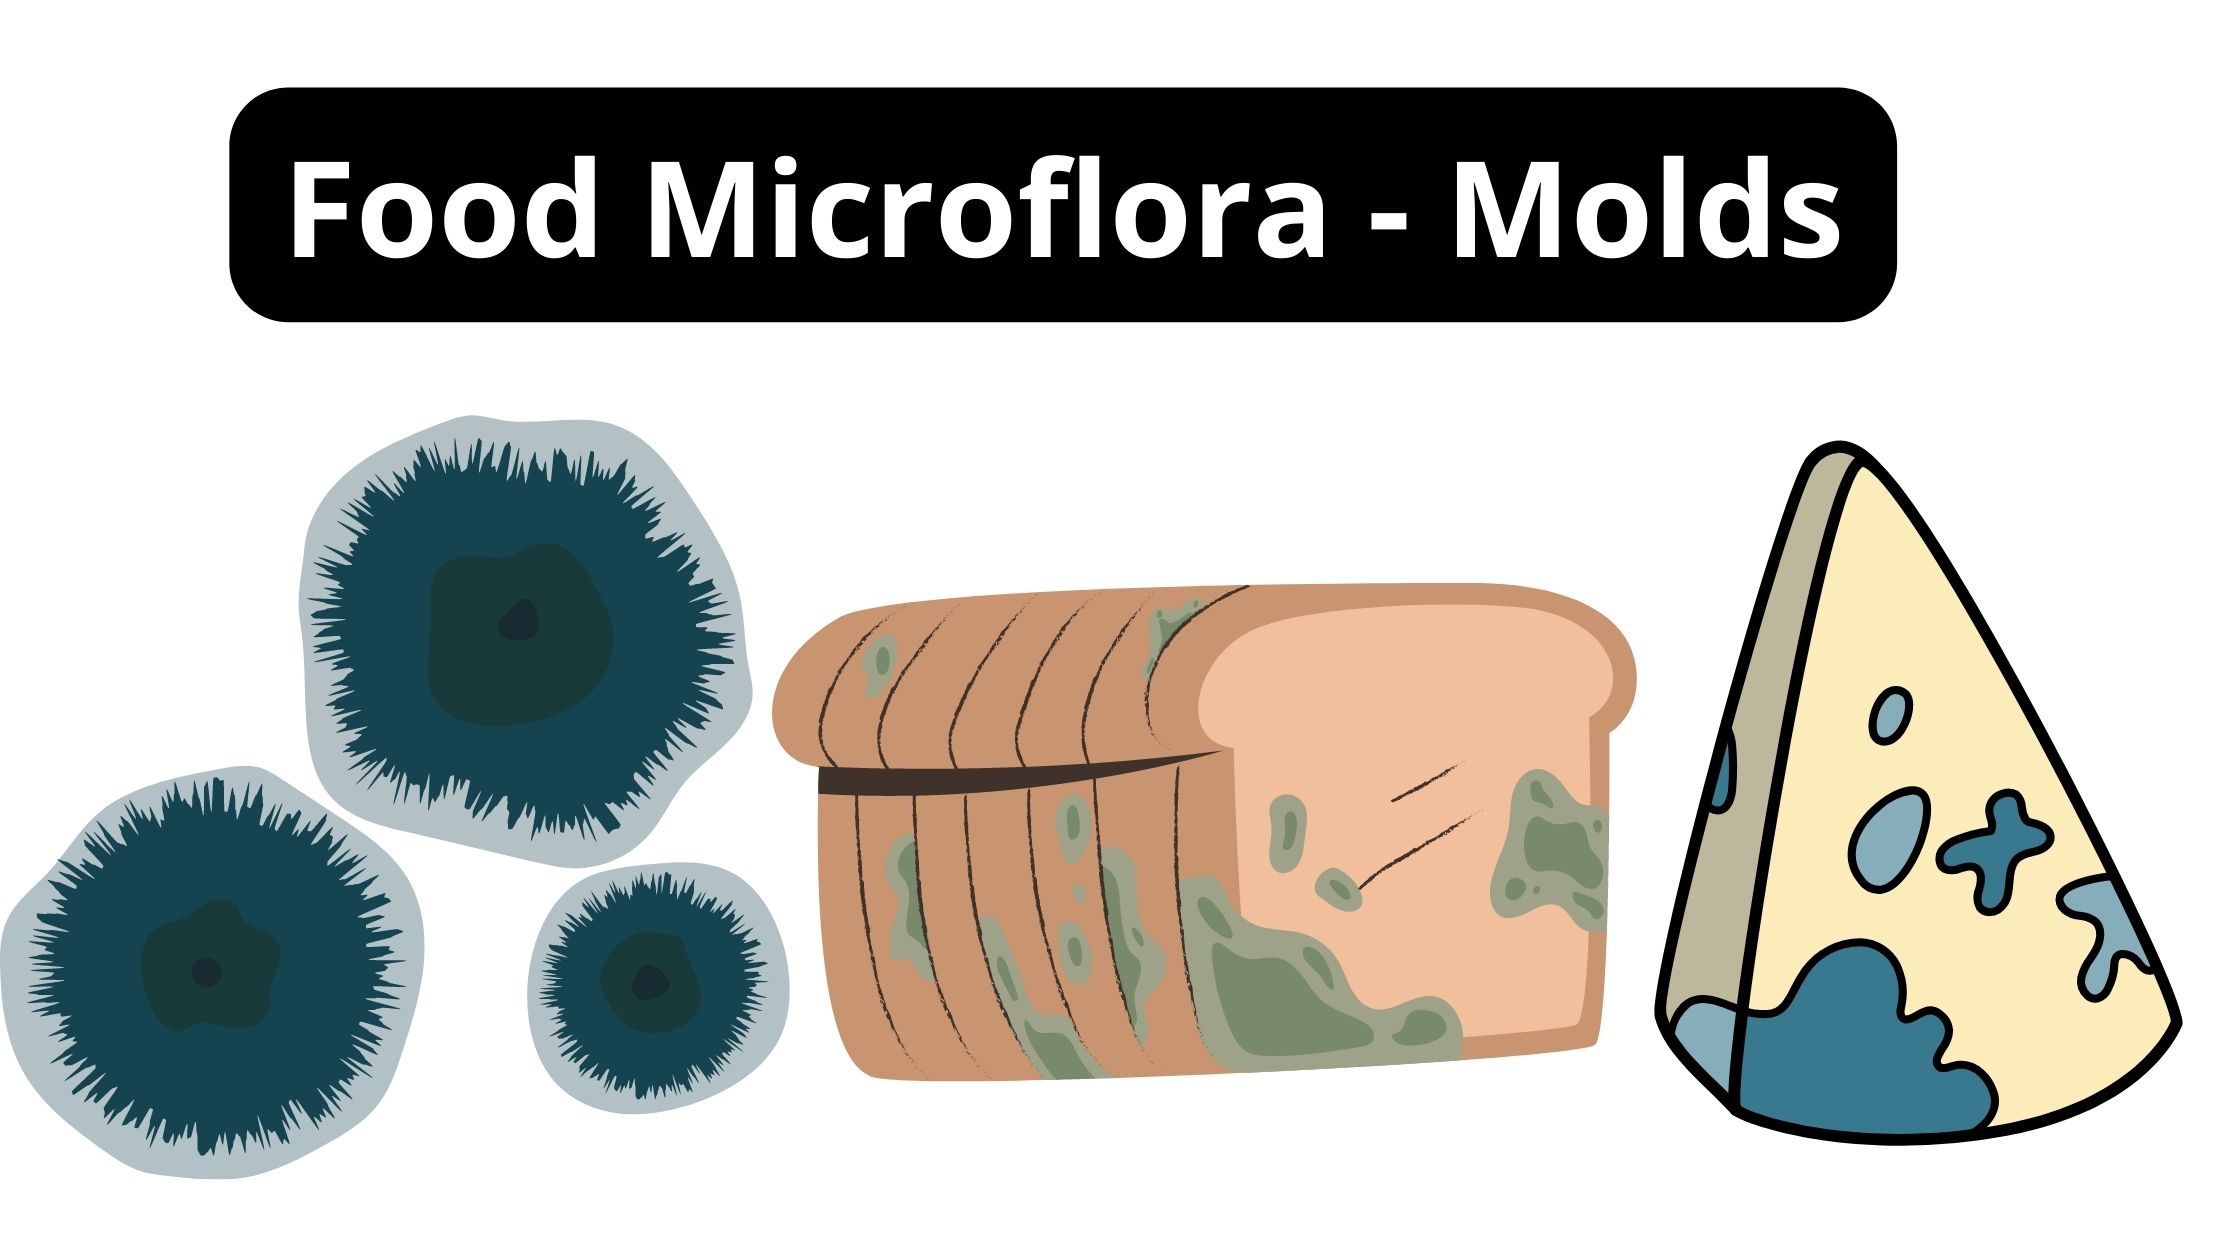 Food Microflora - Molds